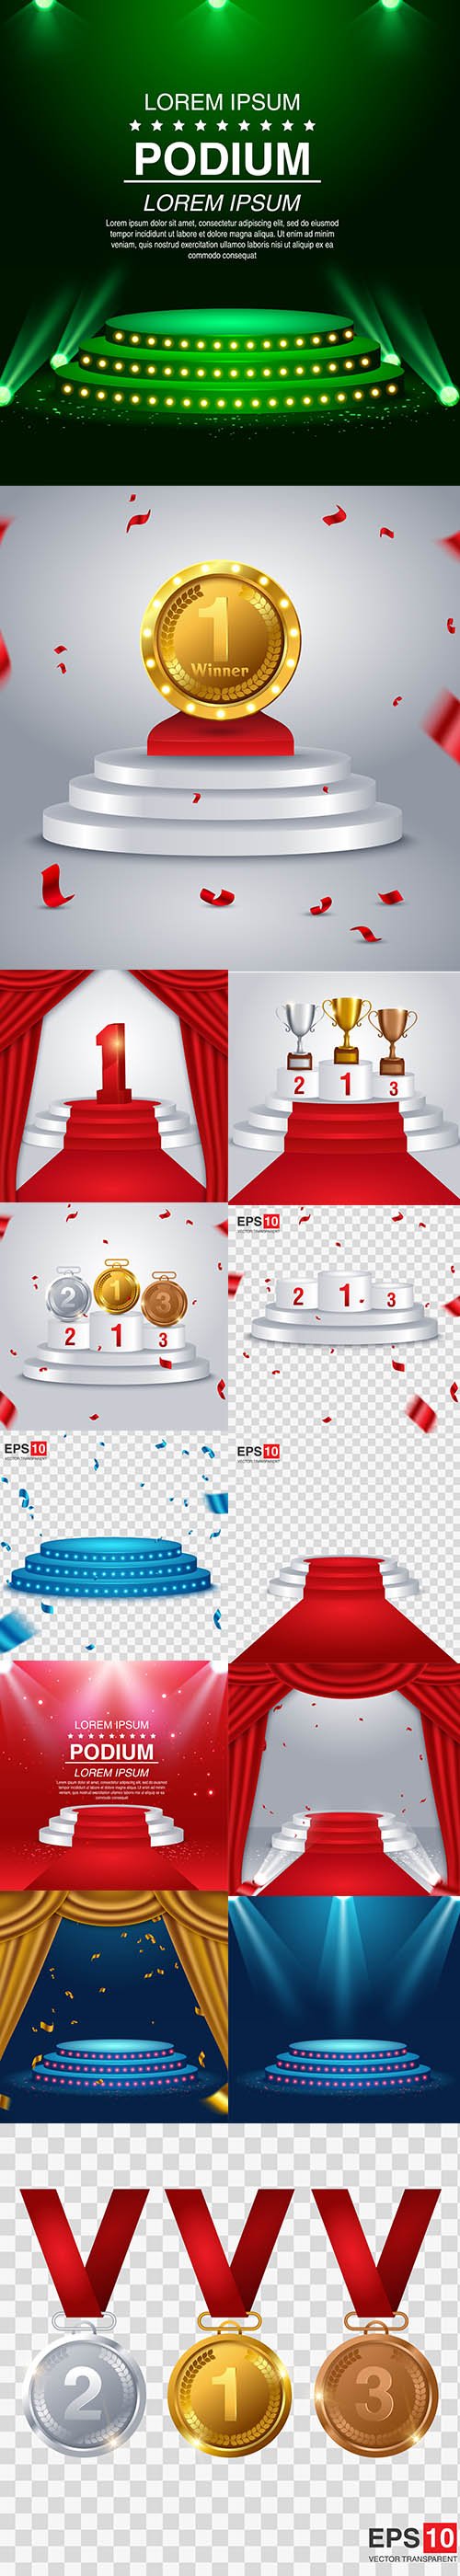 Red Carpet Round Podium Backgrounds Set